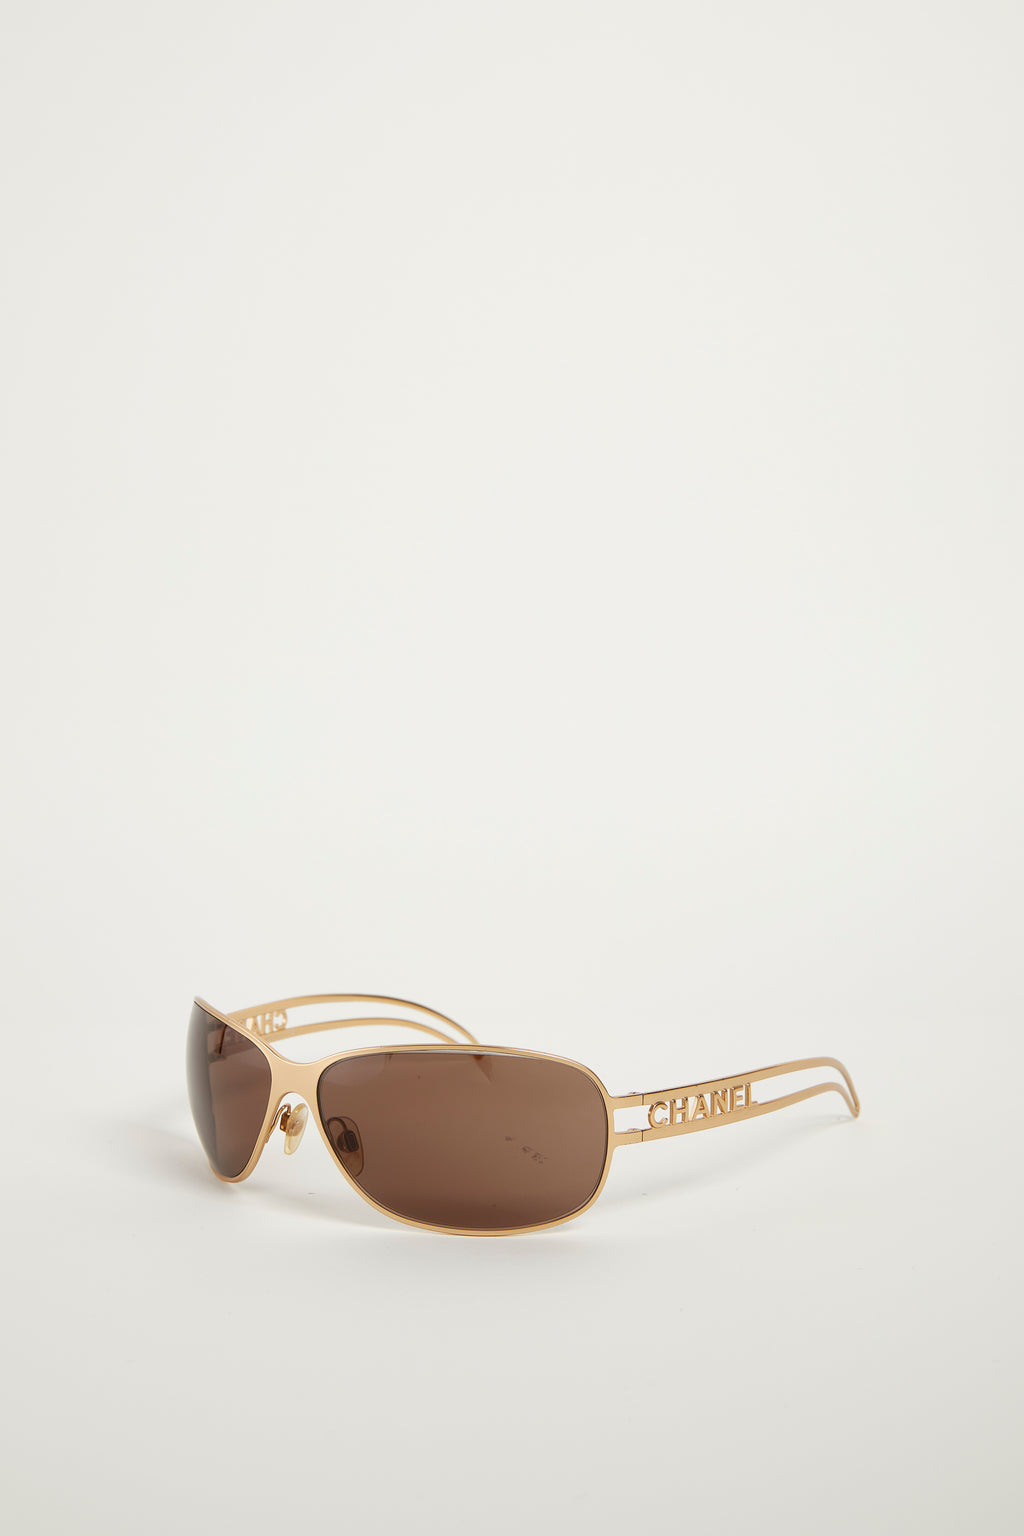 2000 Chanel Gold Sunglasses